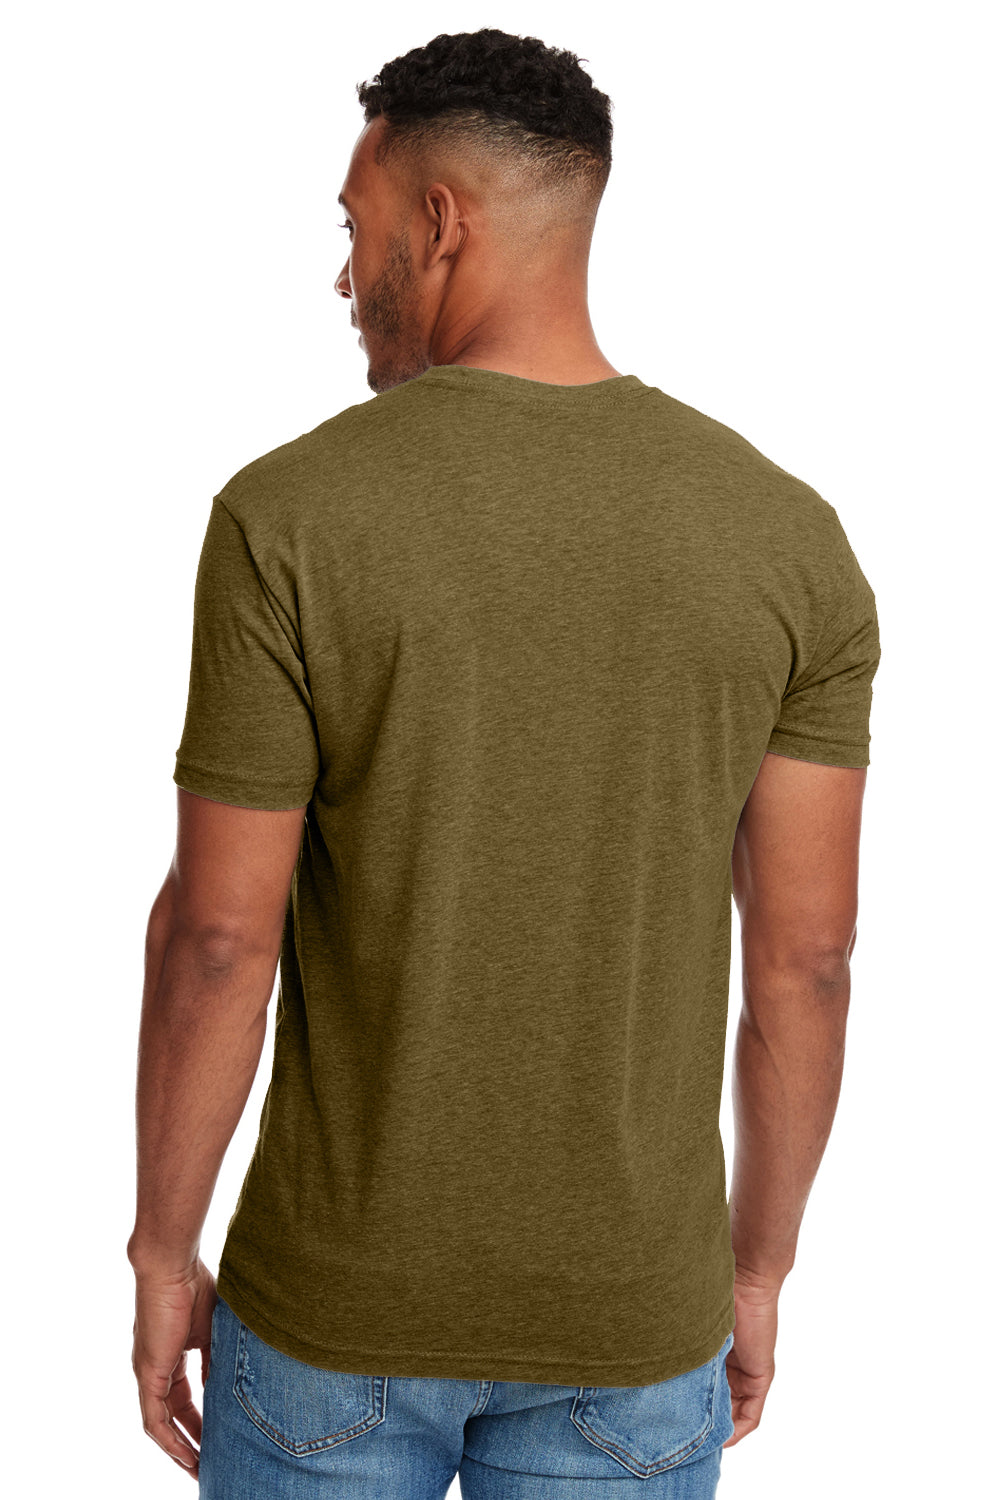 Next Level N6210 Mens CVC Jersey Short Sleeve Crewneck T-Shirt Military Green Back